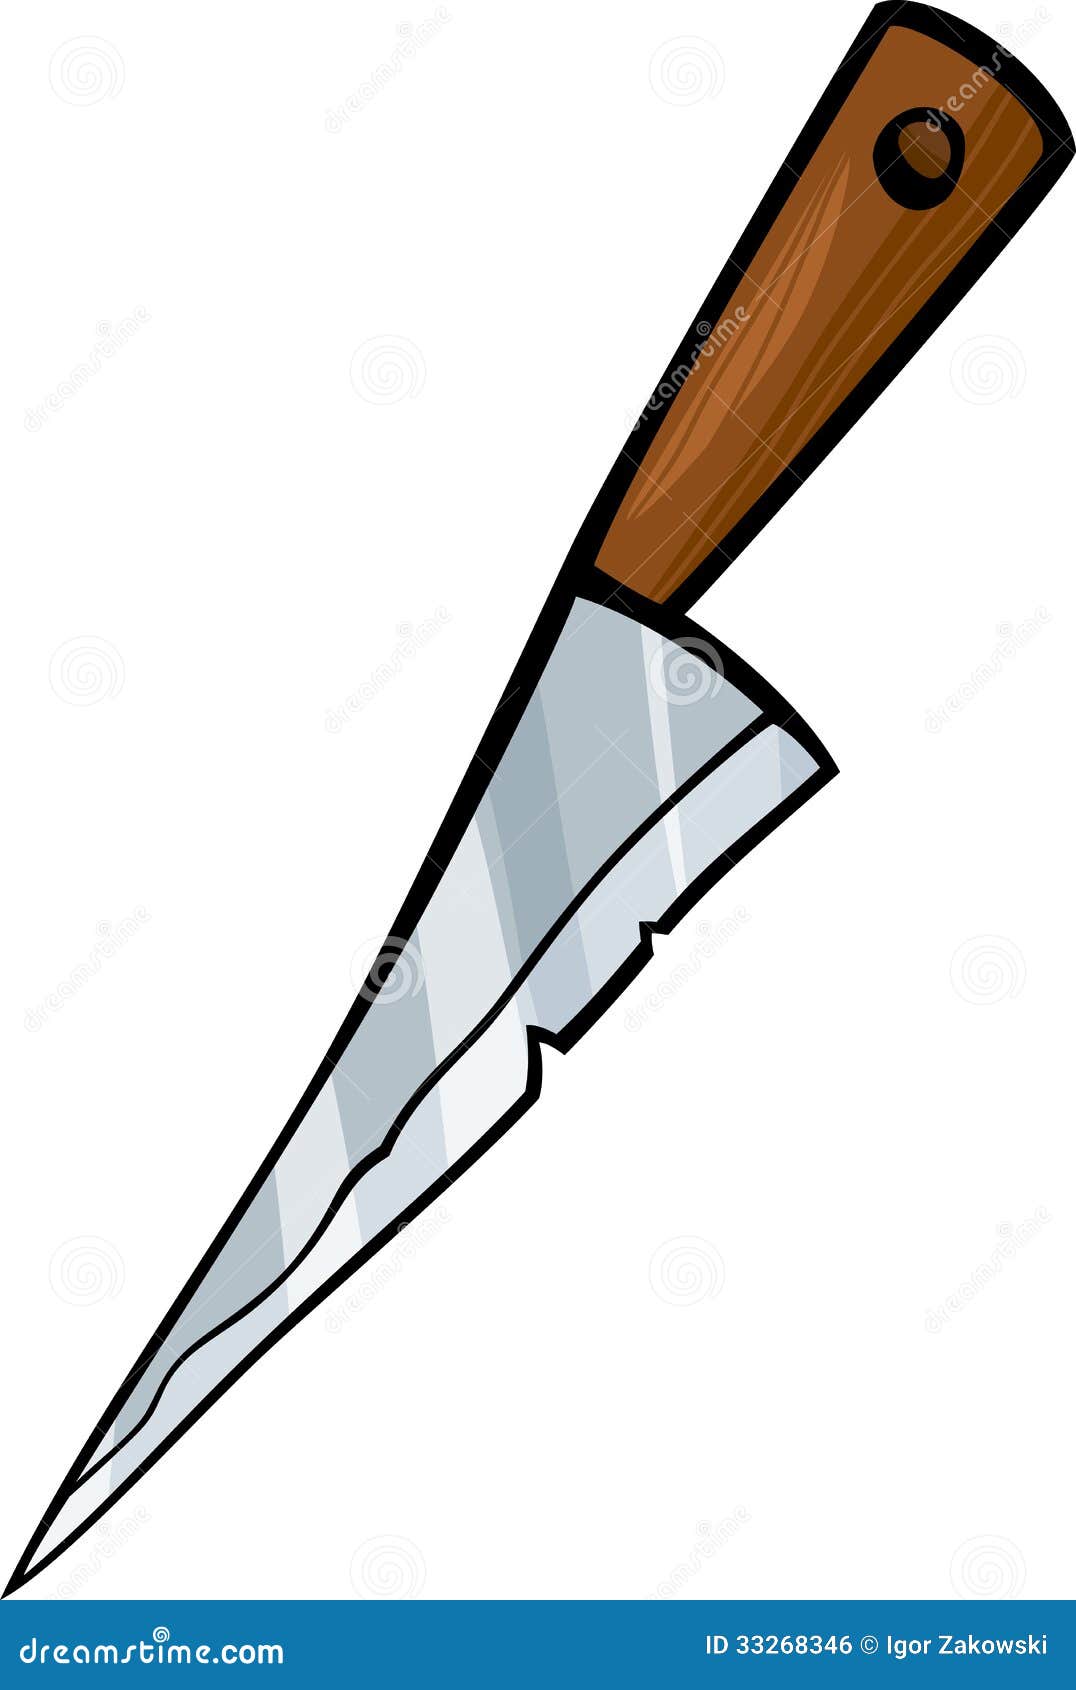 Knife Clip Art Cartoon Illustration Royalty Free Stock Image - Image